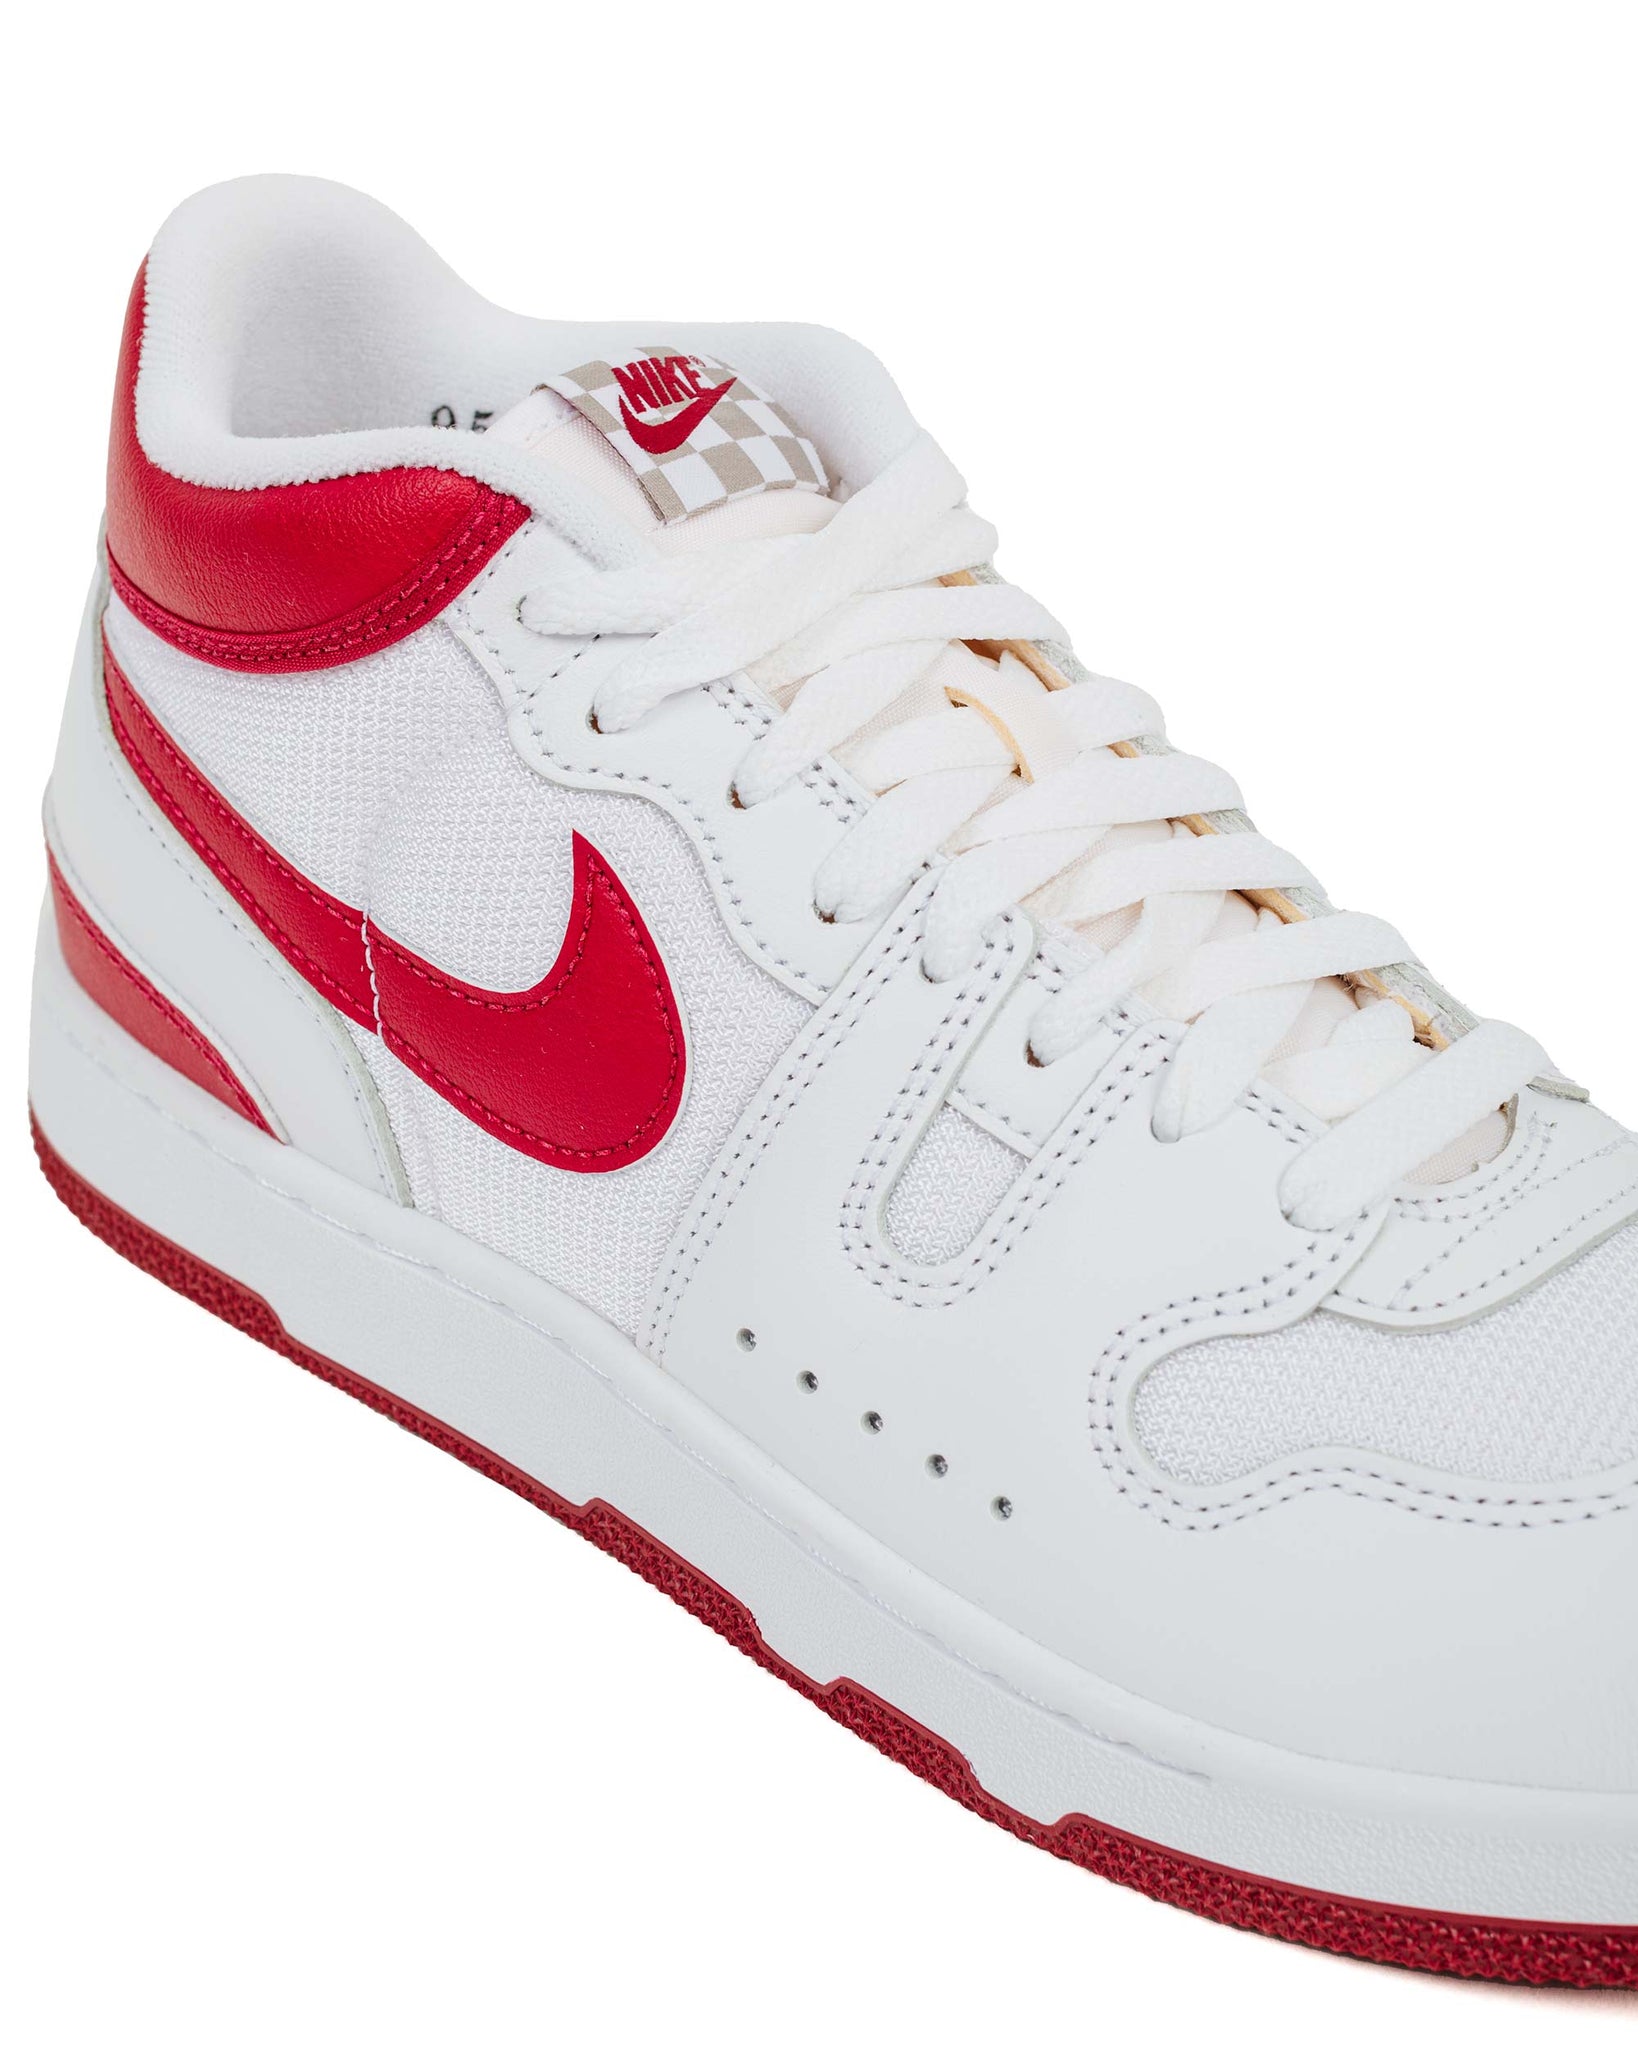 Nike Mac Attack QS SP White/Red Crush